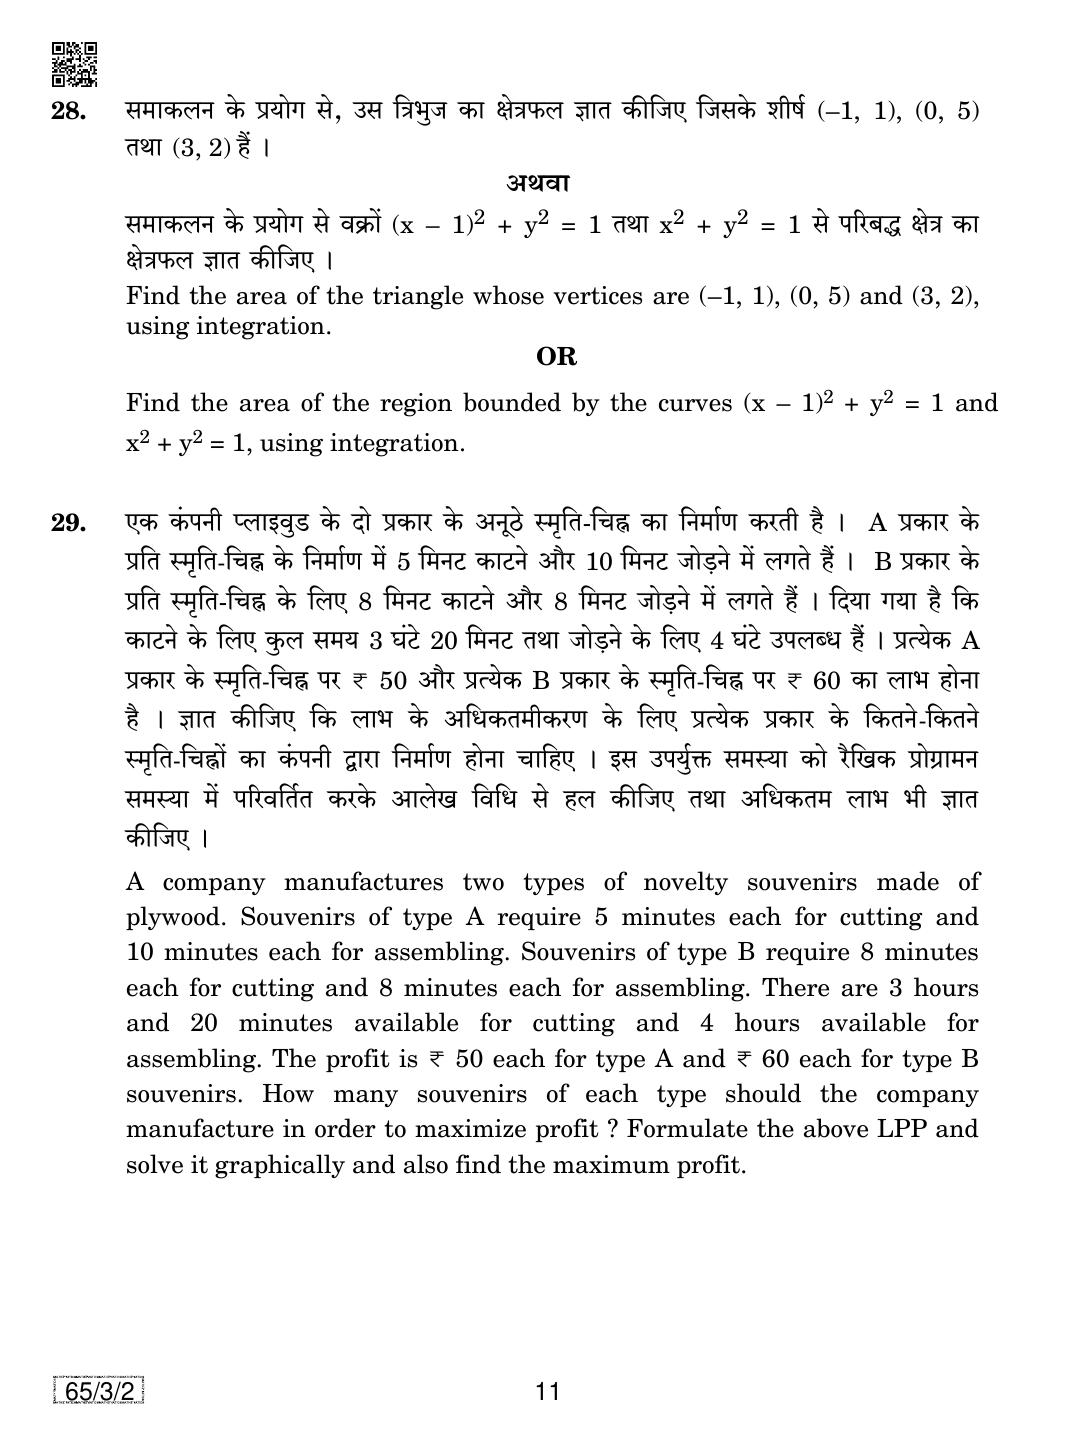 CBSE Class 12 65-3-2 Mathematics 2019 Question Paper - Page 11